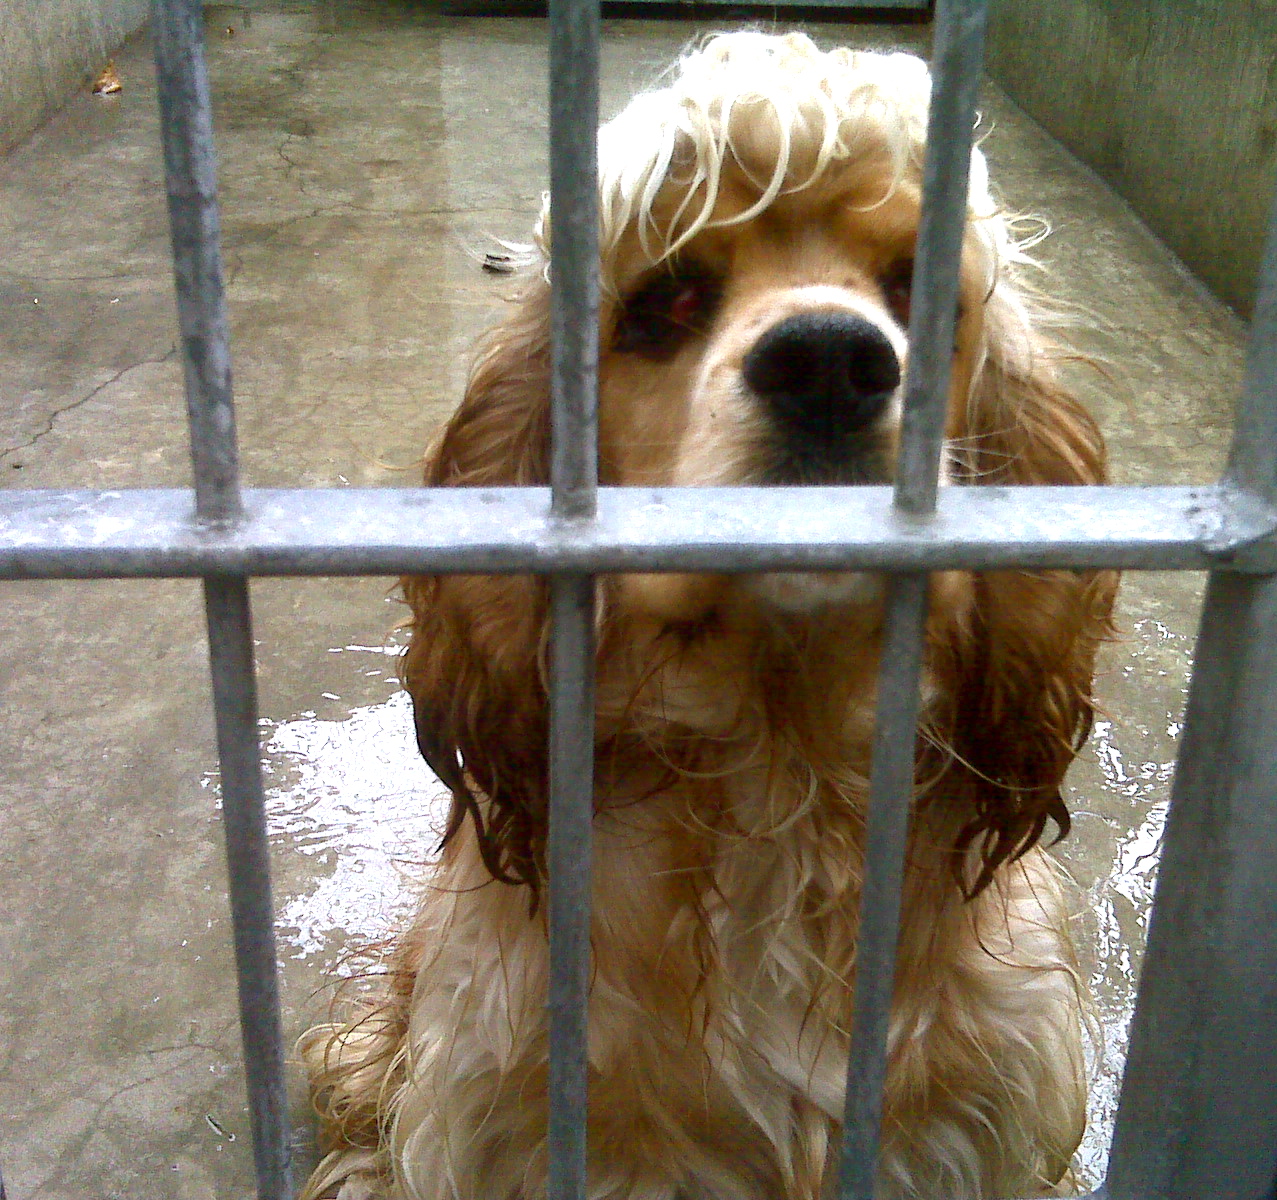 sick dog at animal shelter/dog pound